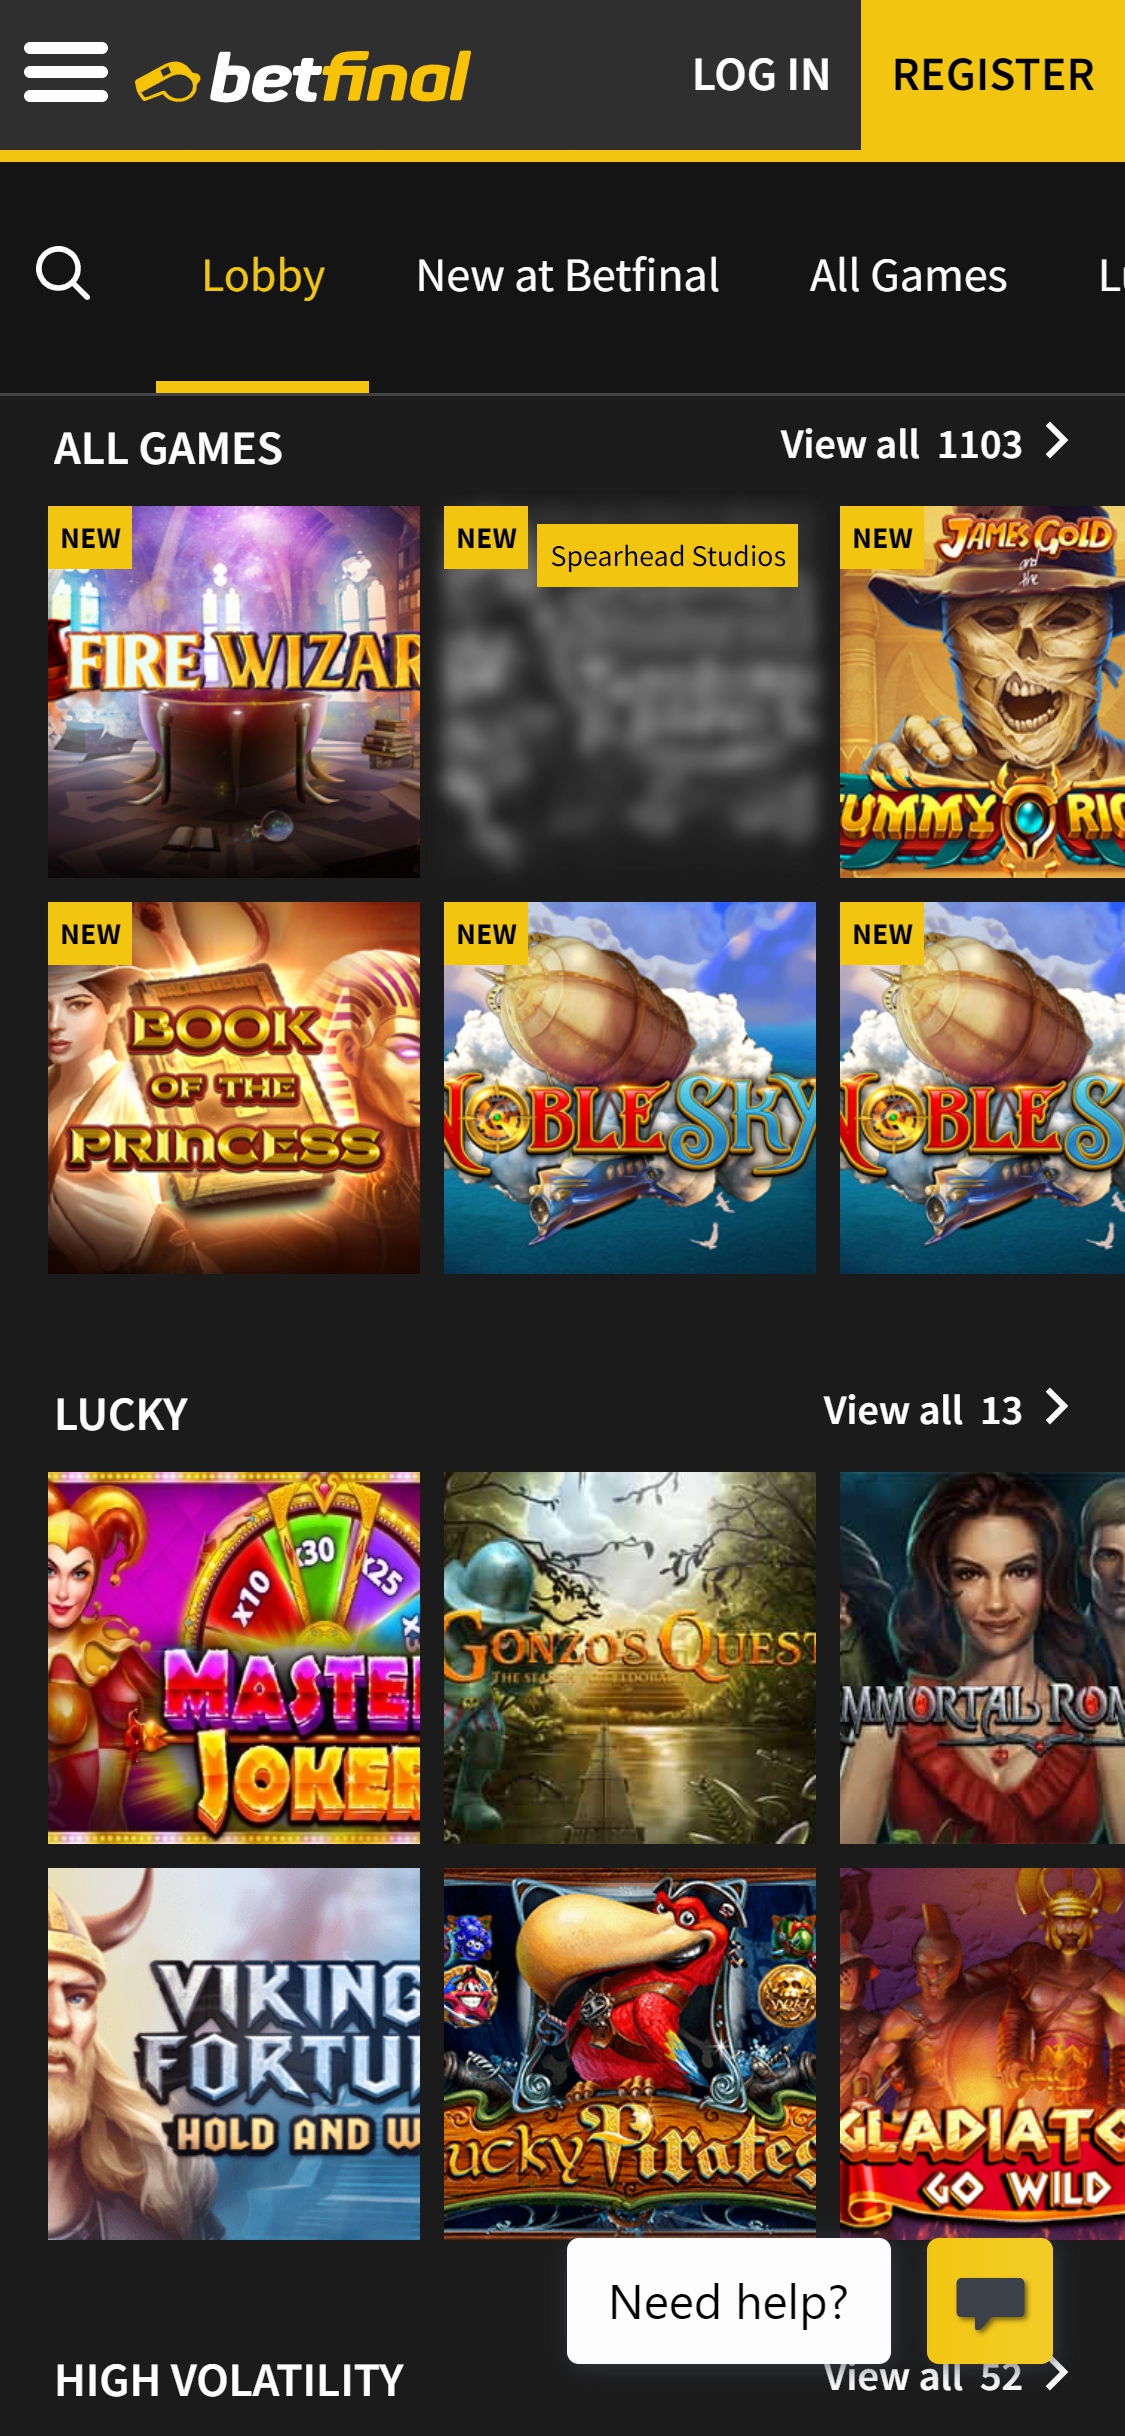 Betfinal Casino Mobile Games Review